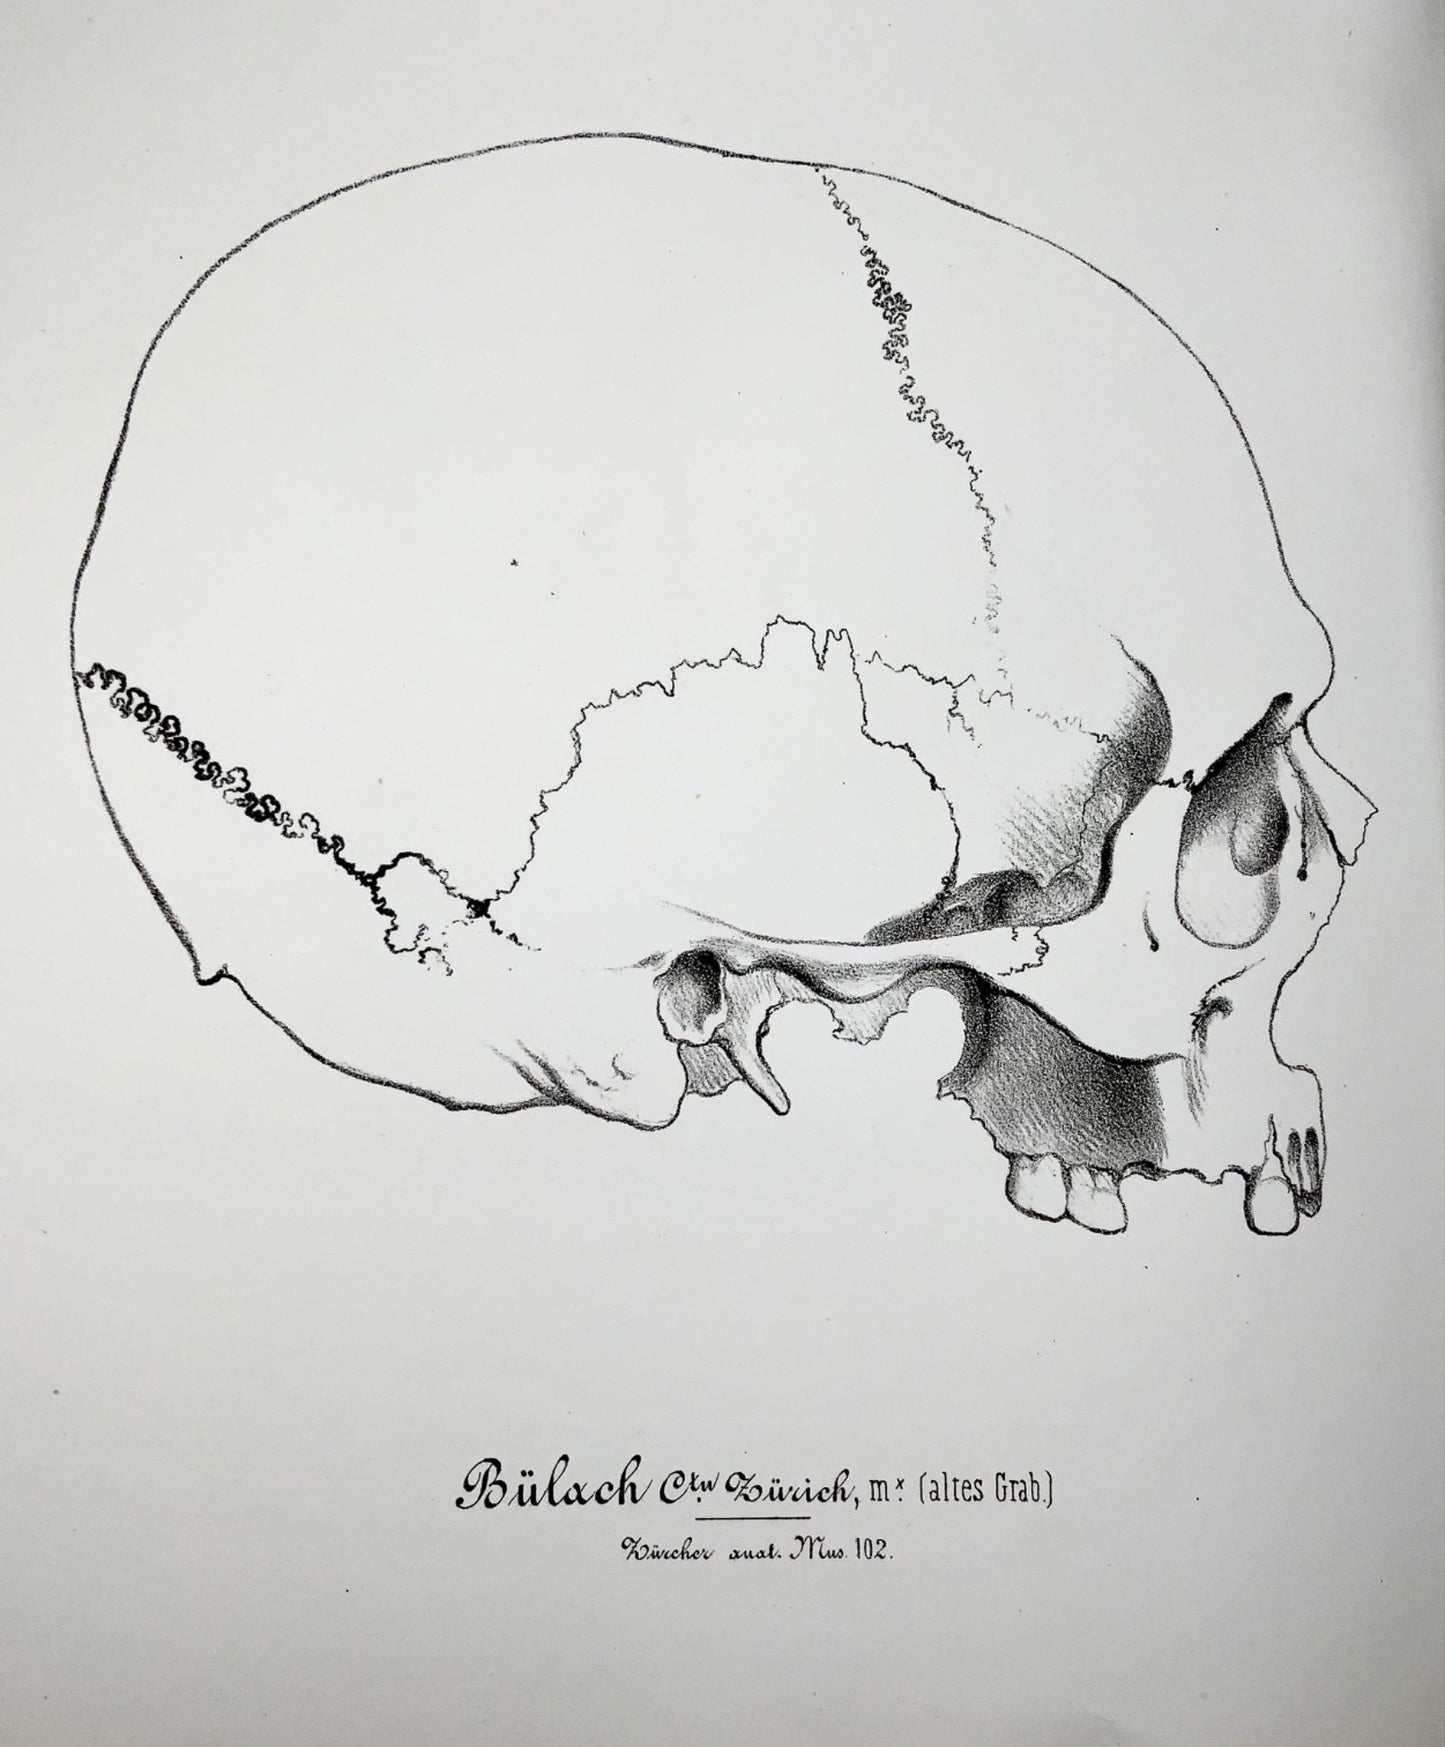 1864 Rutimeyer & His, Crania Helvetica, 82 stone lithographs, sole edition, anatomy, book